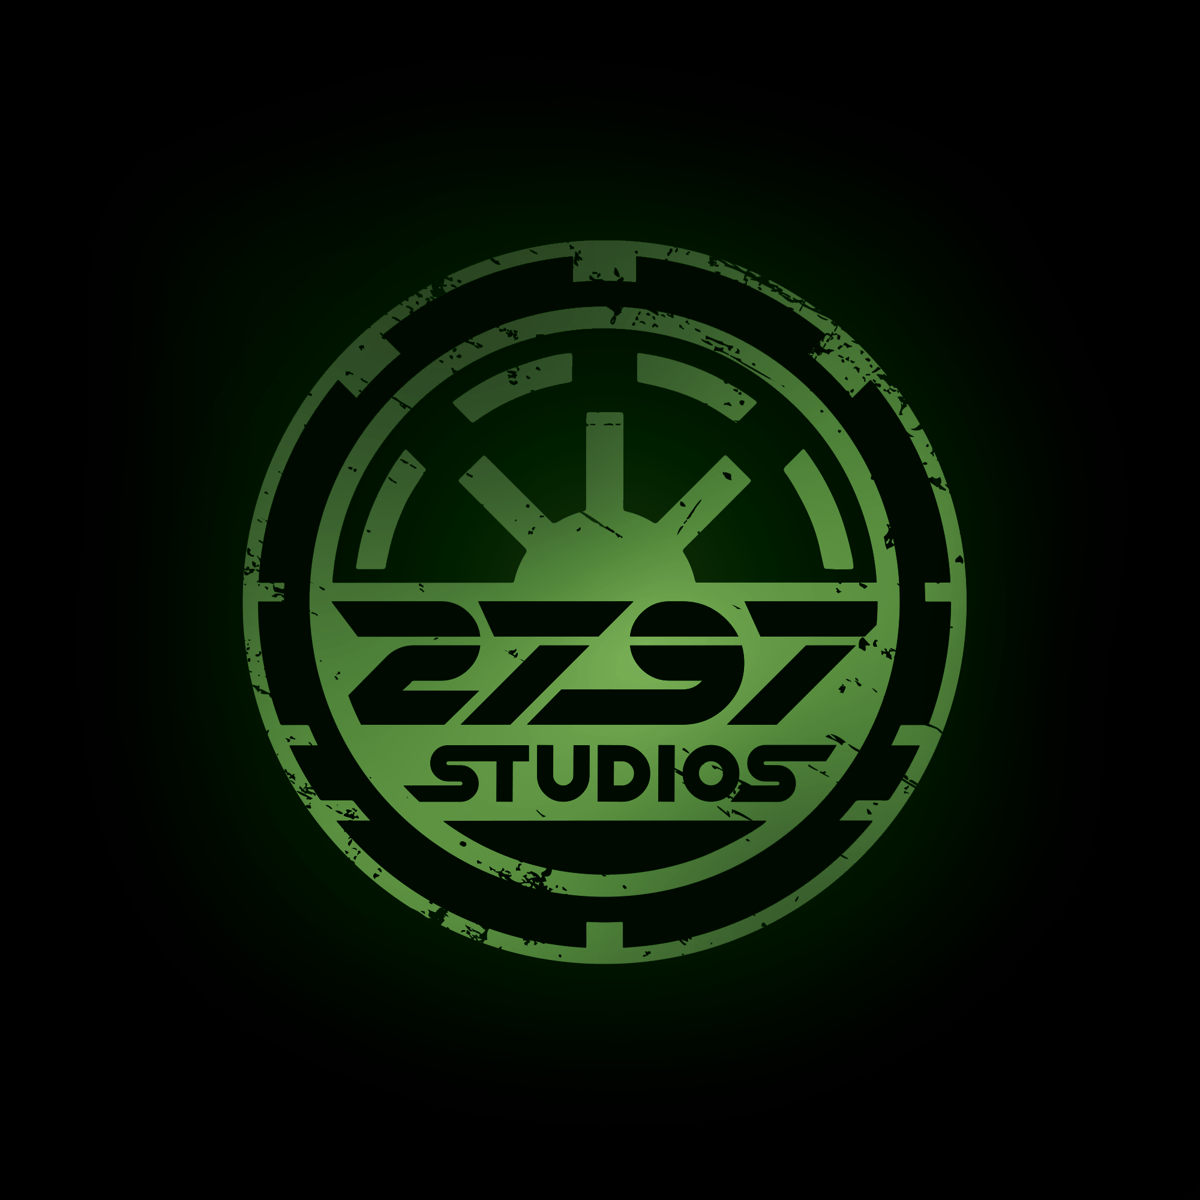 2797 studios